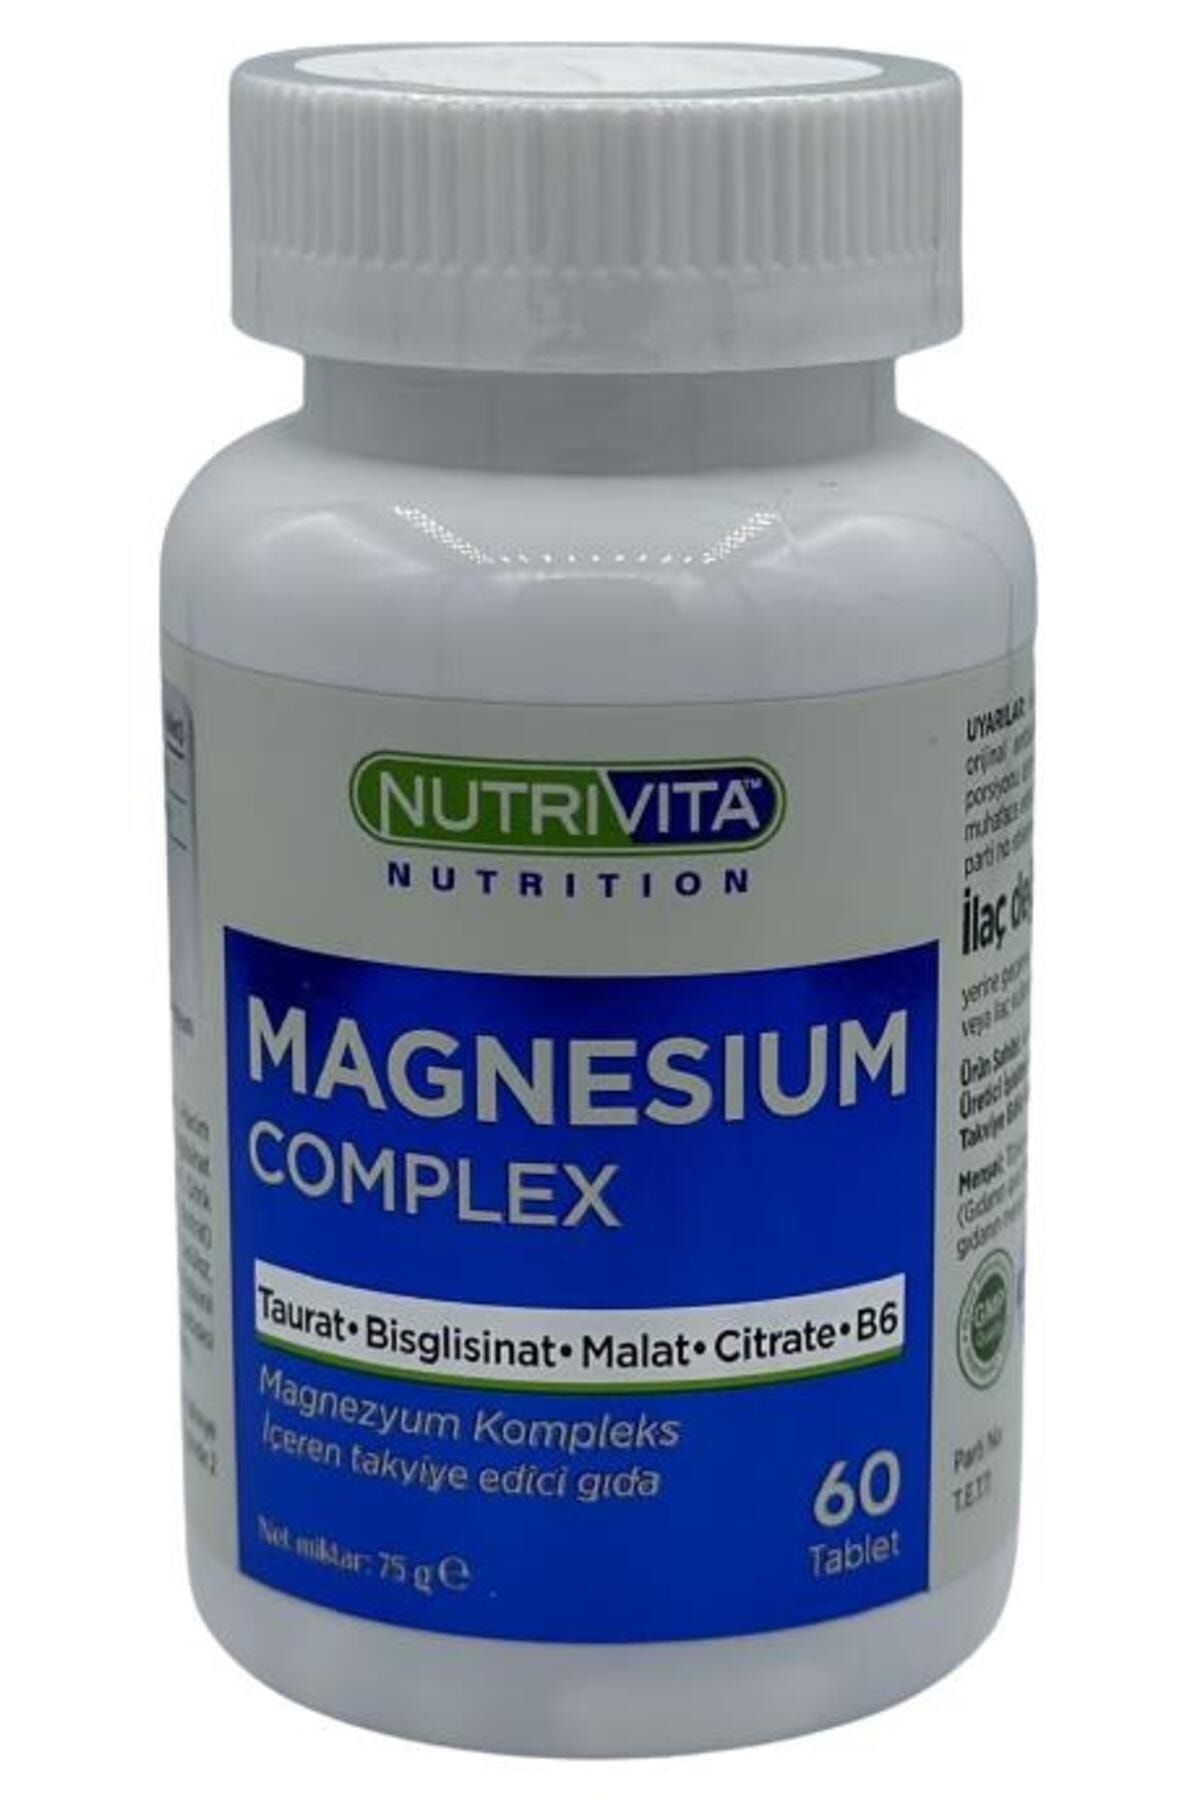 Nutrivita Nutrition Magnesium Complex 60 Tablet Magnezyum Kompleks Taurat Bisglisinat Malat Sitrat V